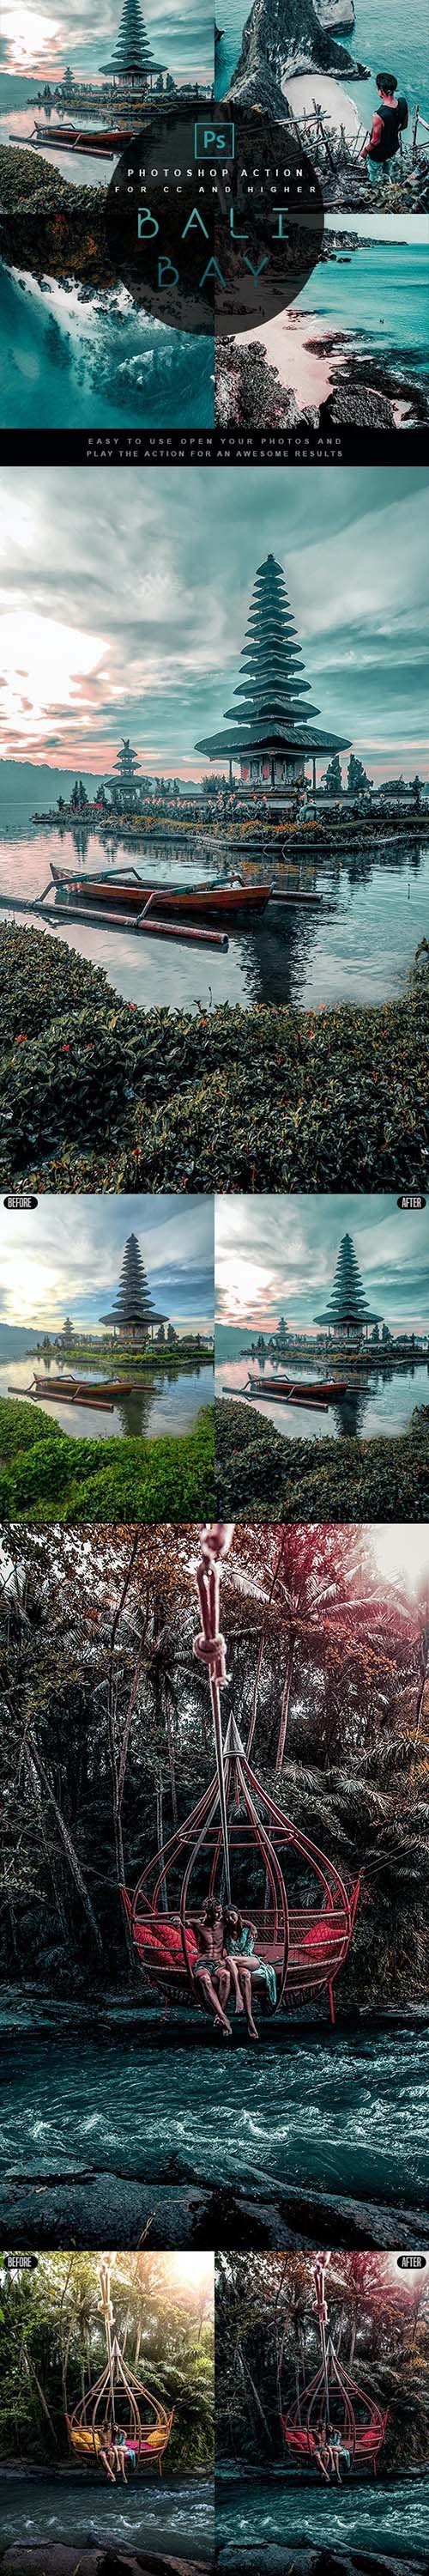 Bali Bay - Photoshop Action 28295208